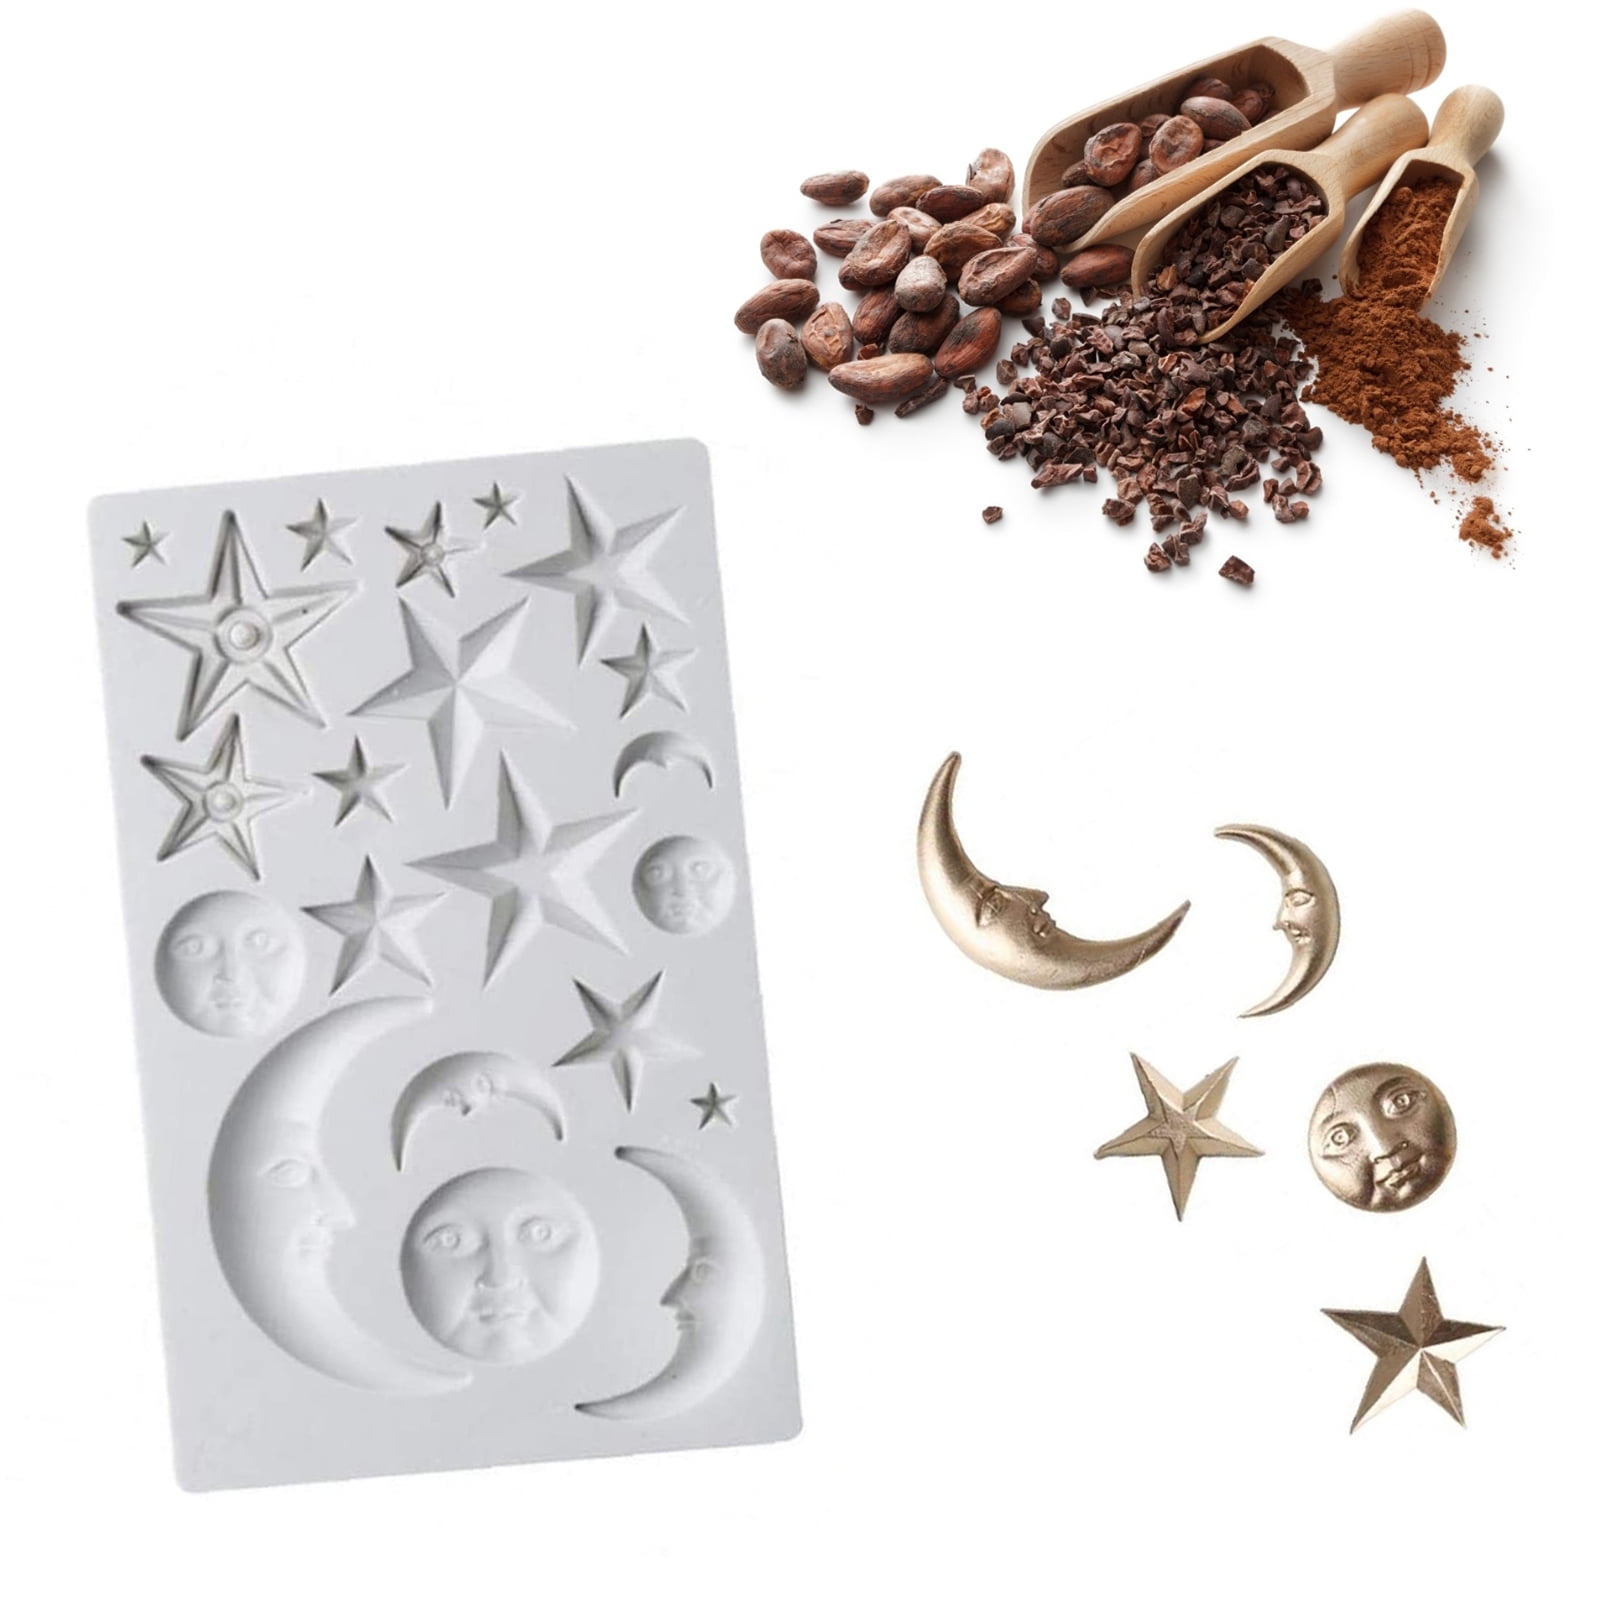 Clay Mold Craft Mold DIY Circles Silicone Mold Cupcake Decorating Resin Mold Chocolate Mold Candy Mold